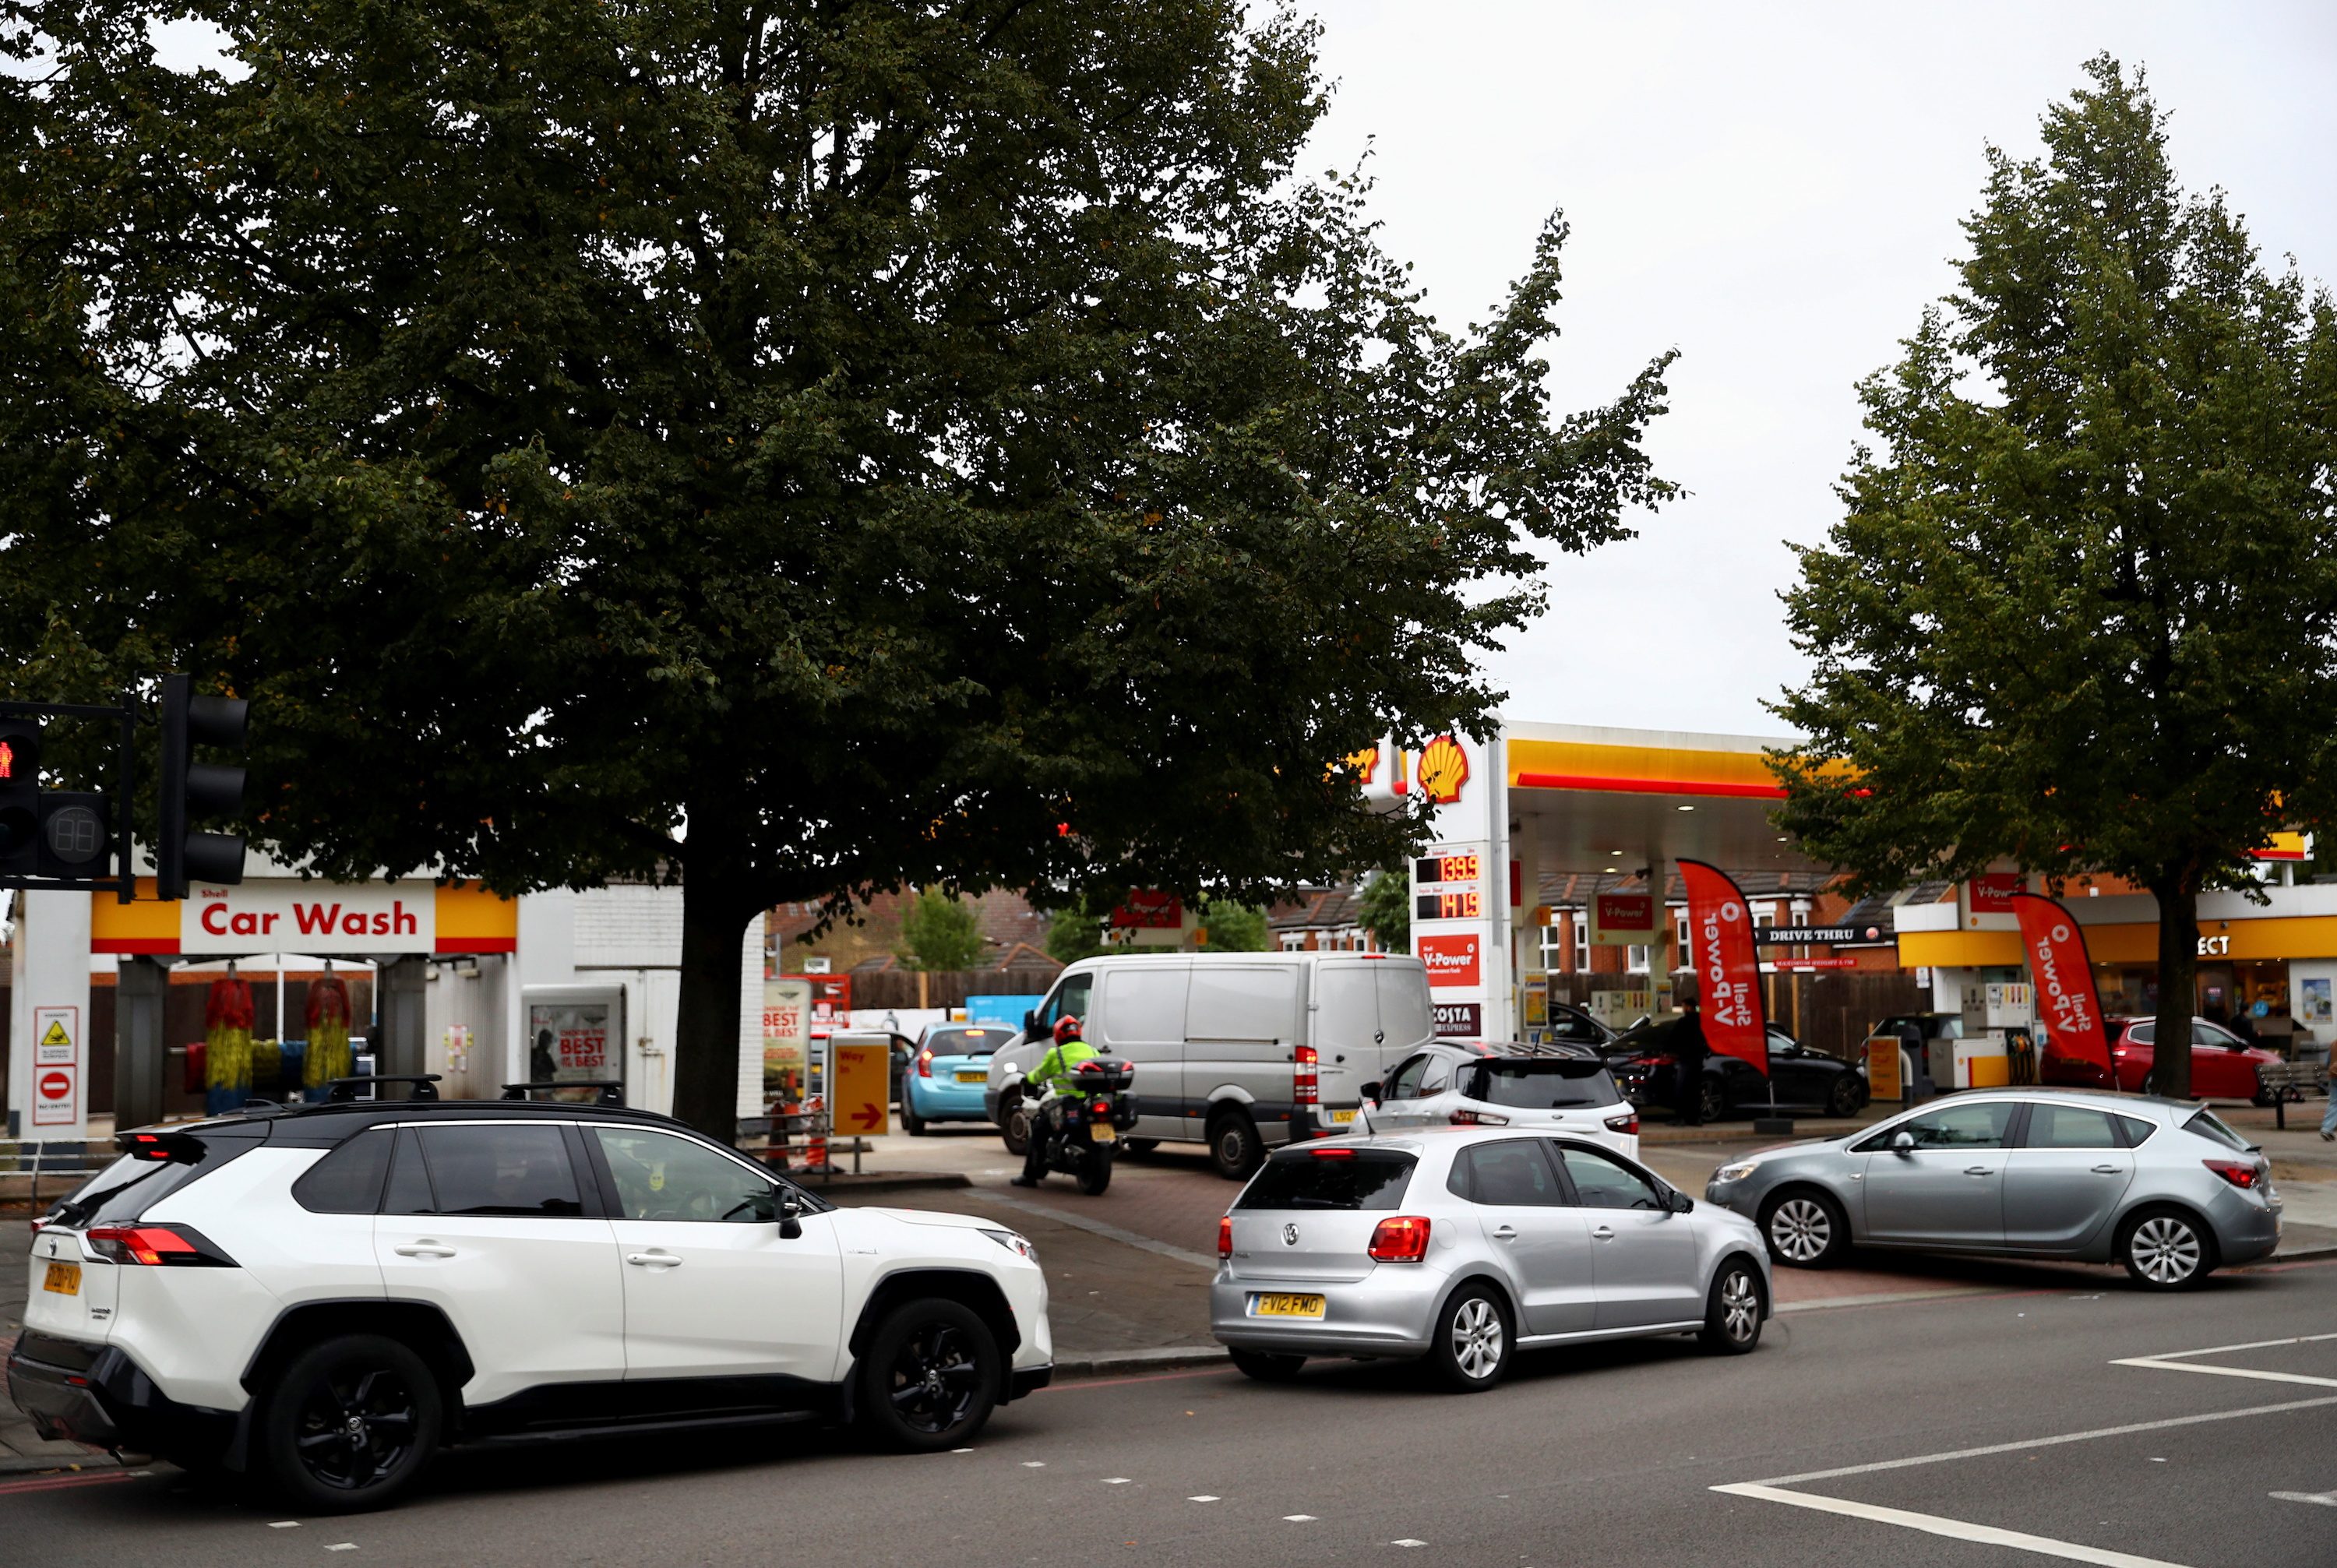 British gas pumps still dry, pig cull fears grow